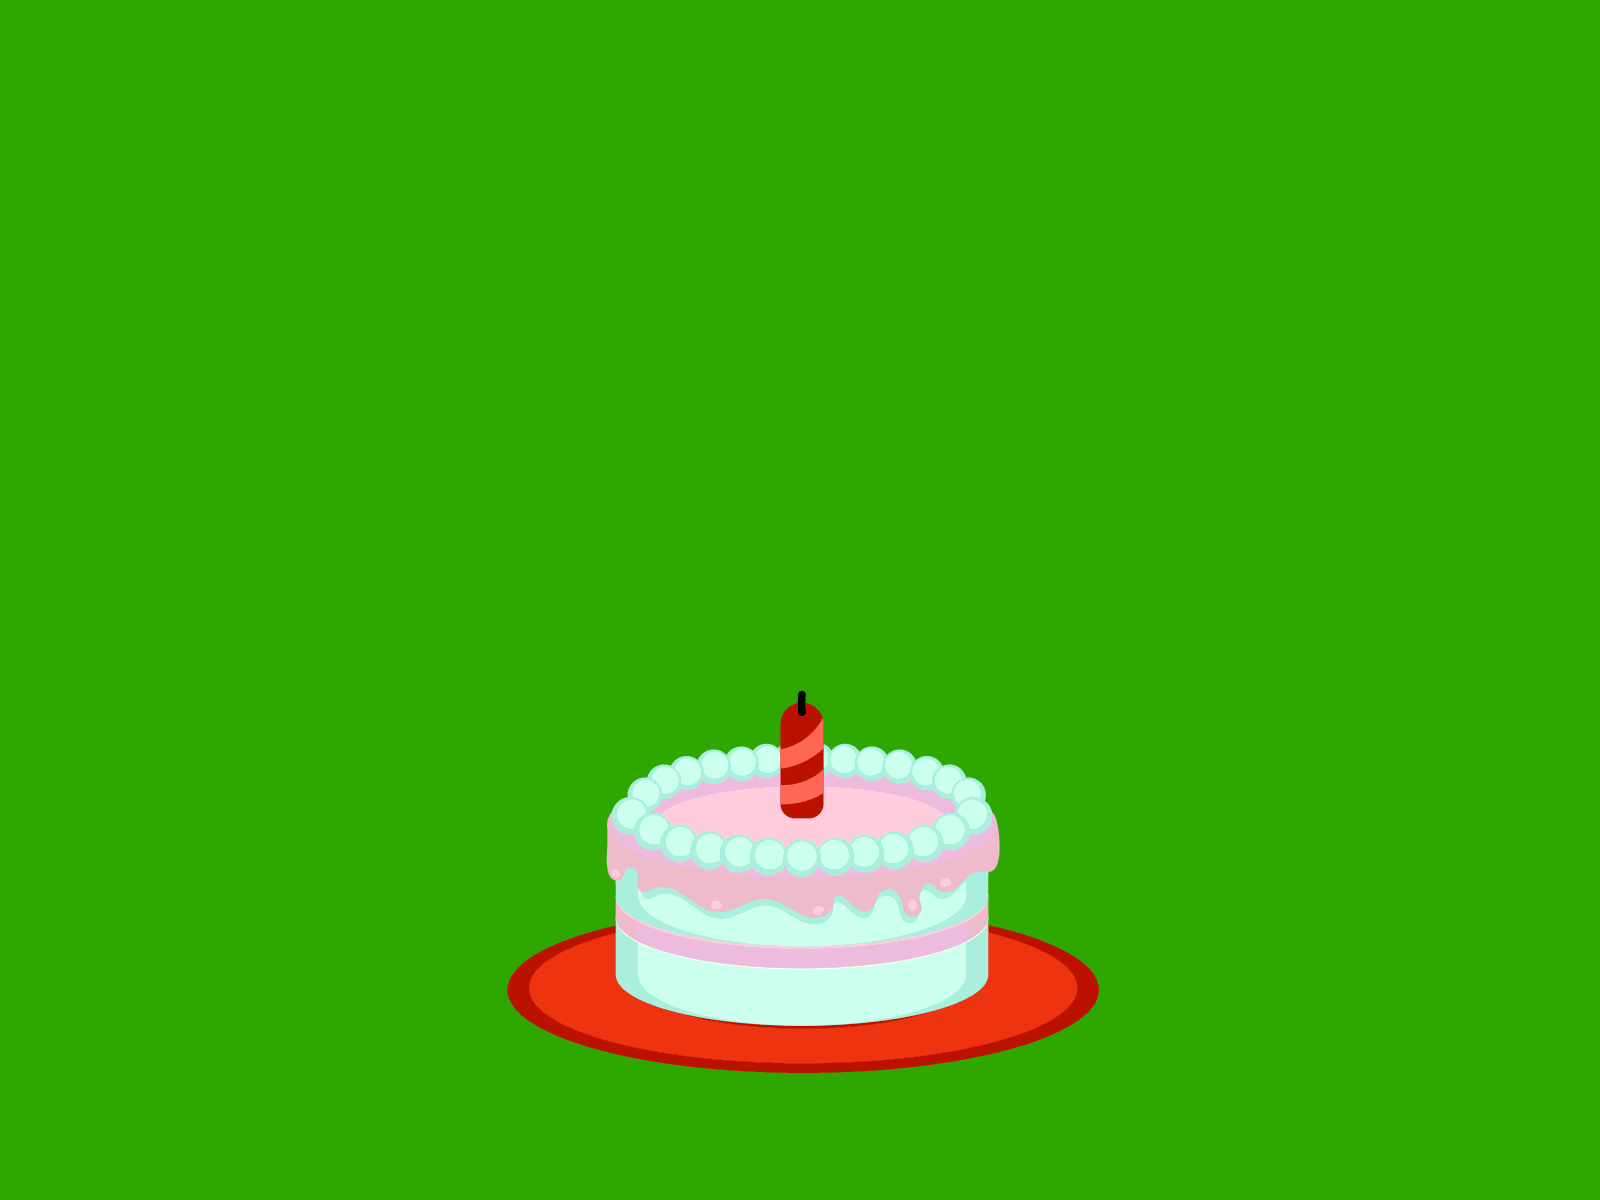 Can a birthday cake celebrate birthdays? by PennyDropHooves on DeviantArt